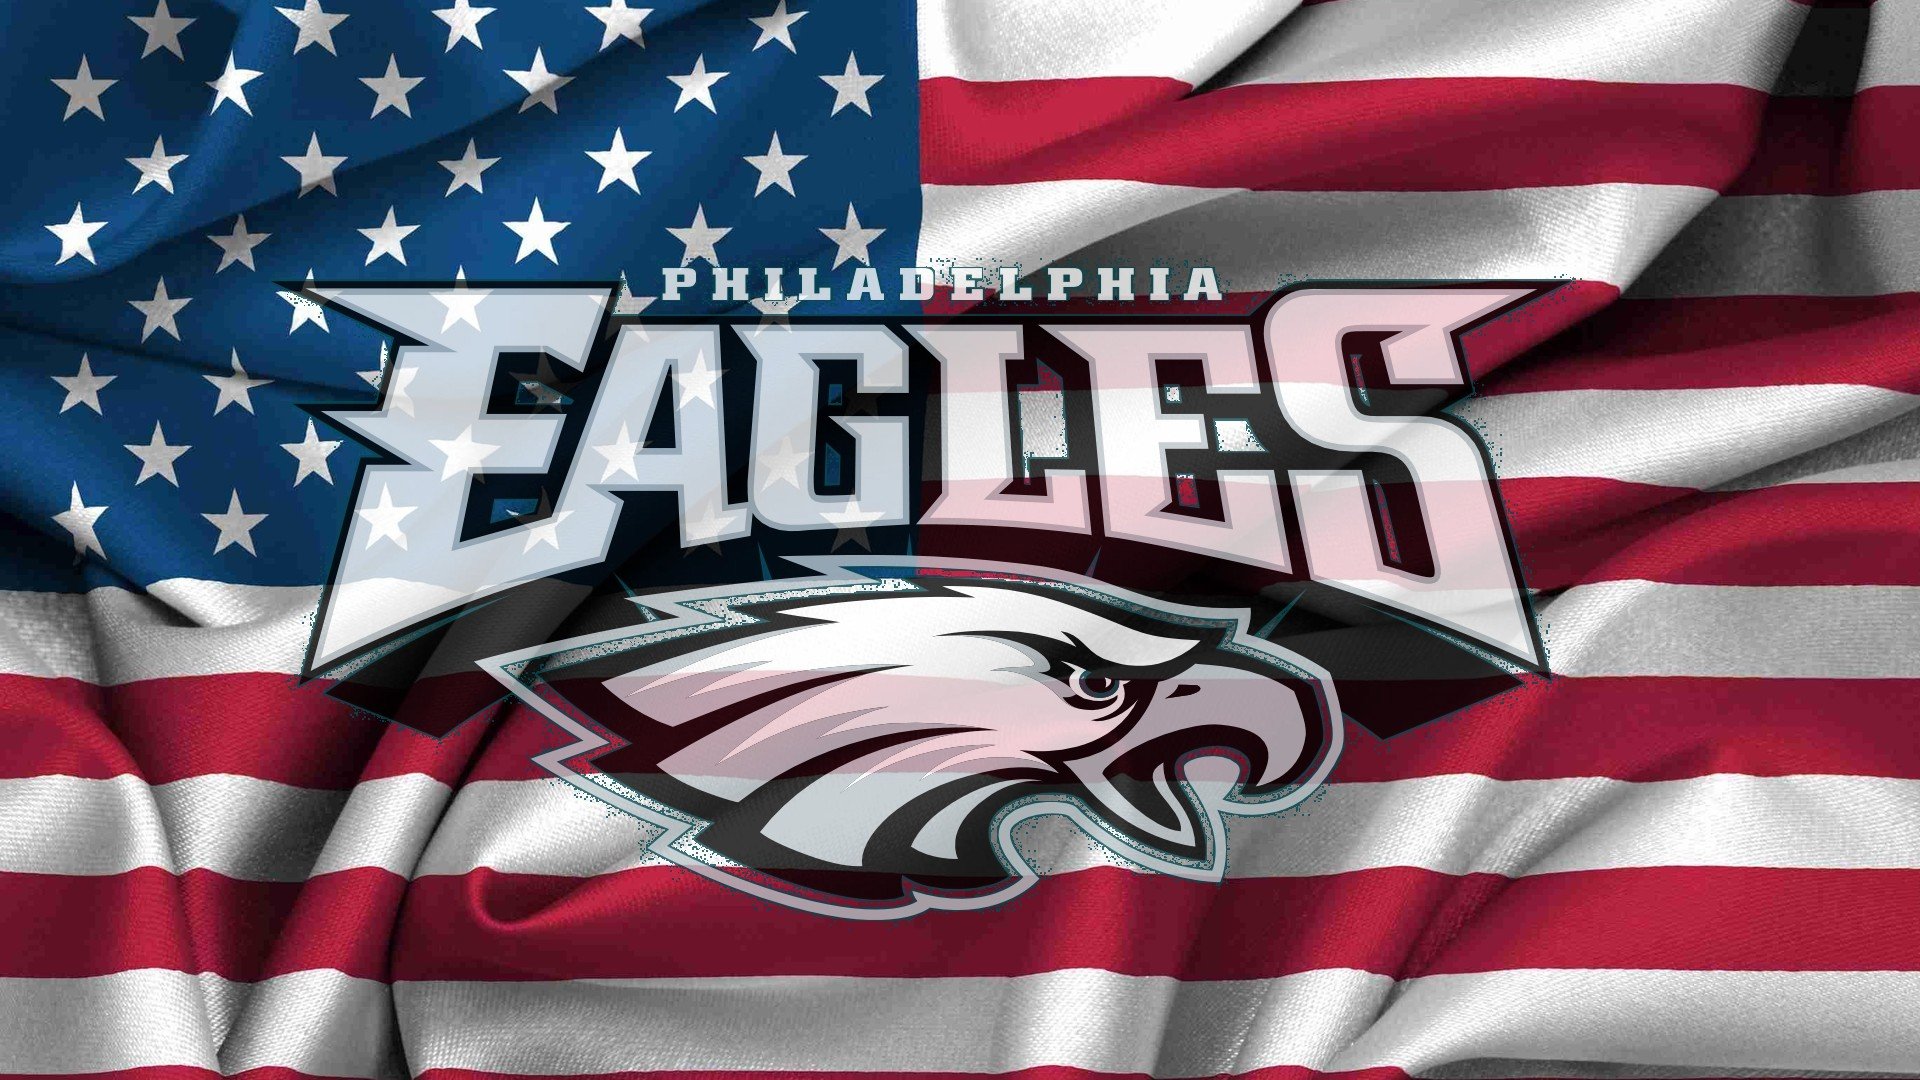 Free download Nfl Eagles Logo Wallpaper Philadelphia eagles logo 1920x1080